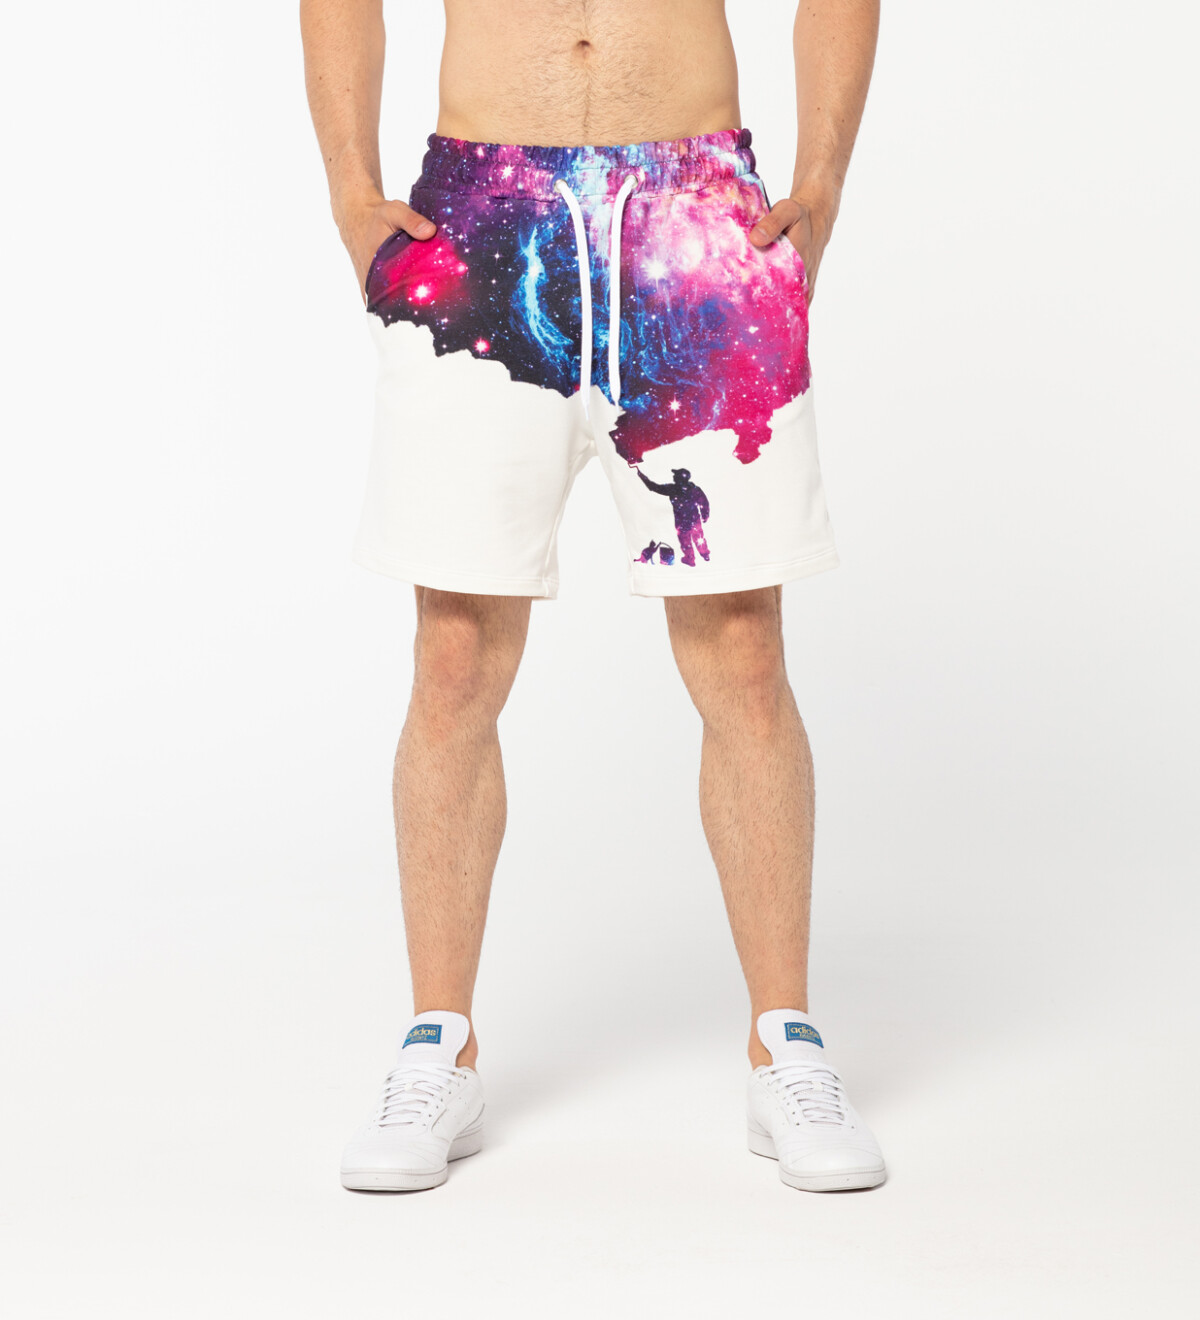 Painter Shorts - XL